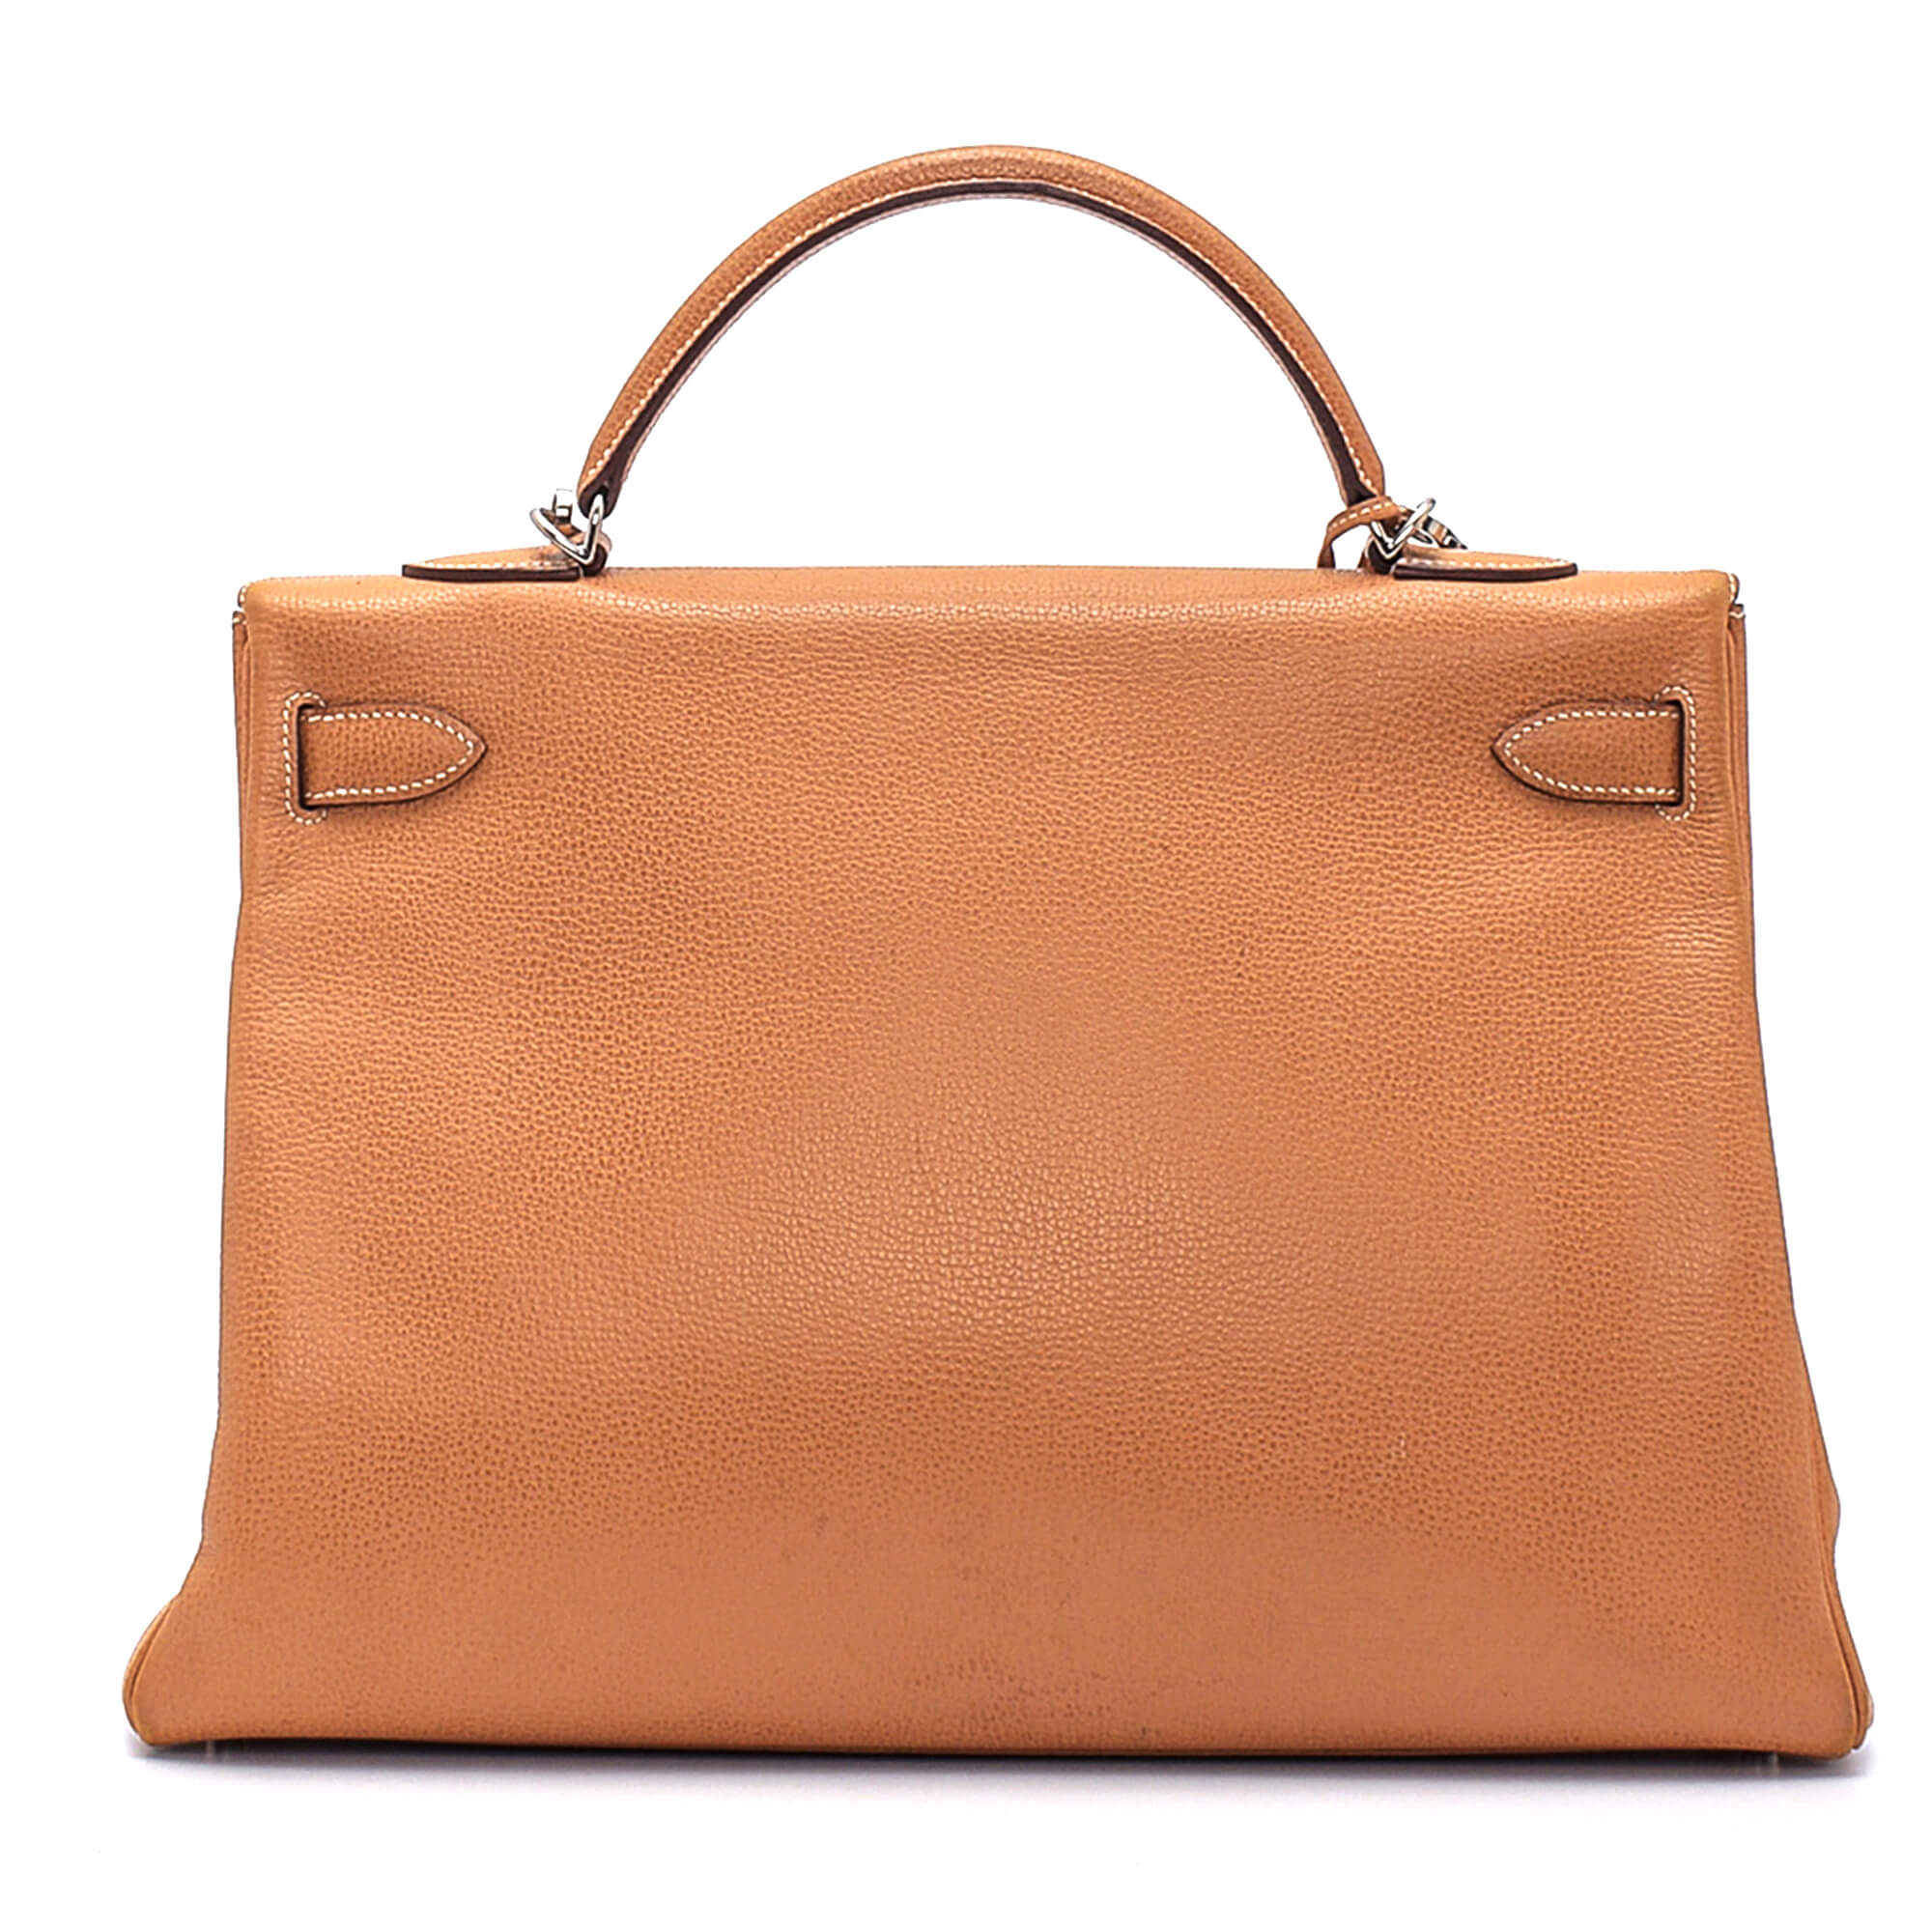 Hermes - Gold Togo Leather PHW Kelly 40 Bag